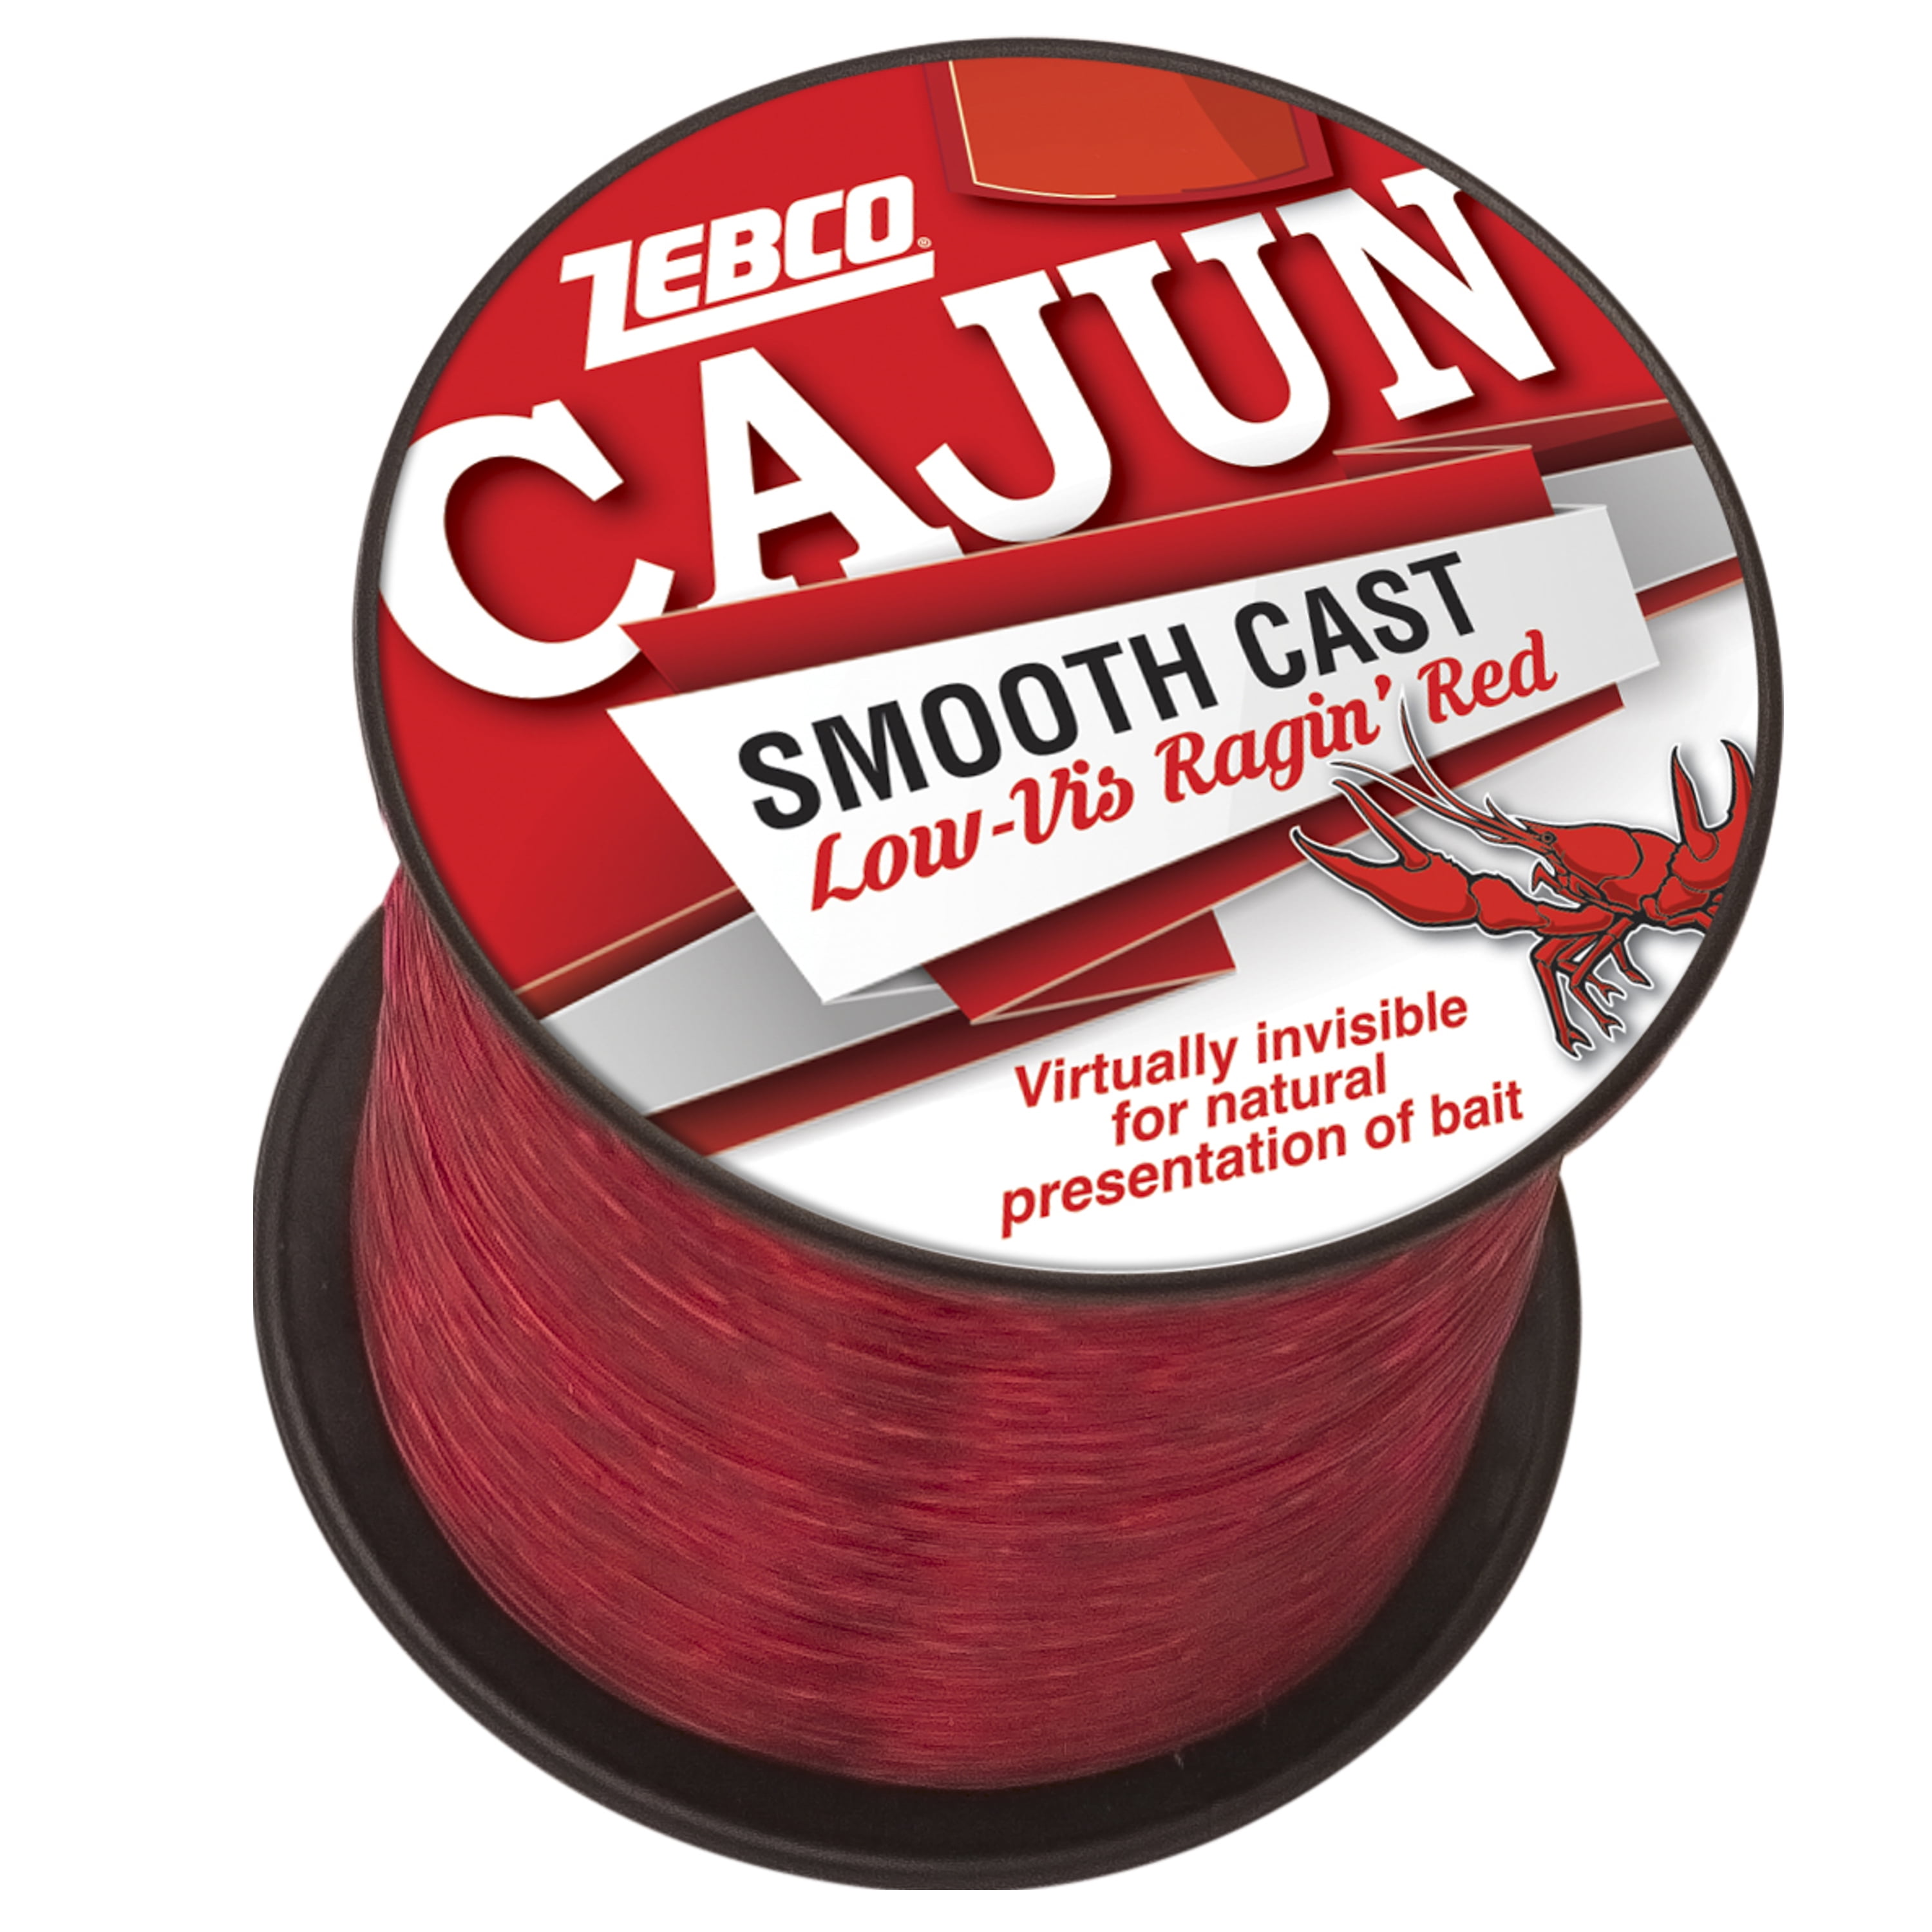 Low Vis Ragin' Red Zebco Cajun Line Smooth Cast Angelschnur